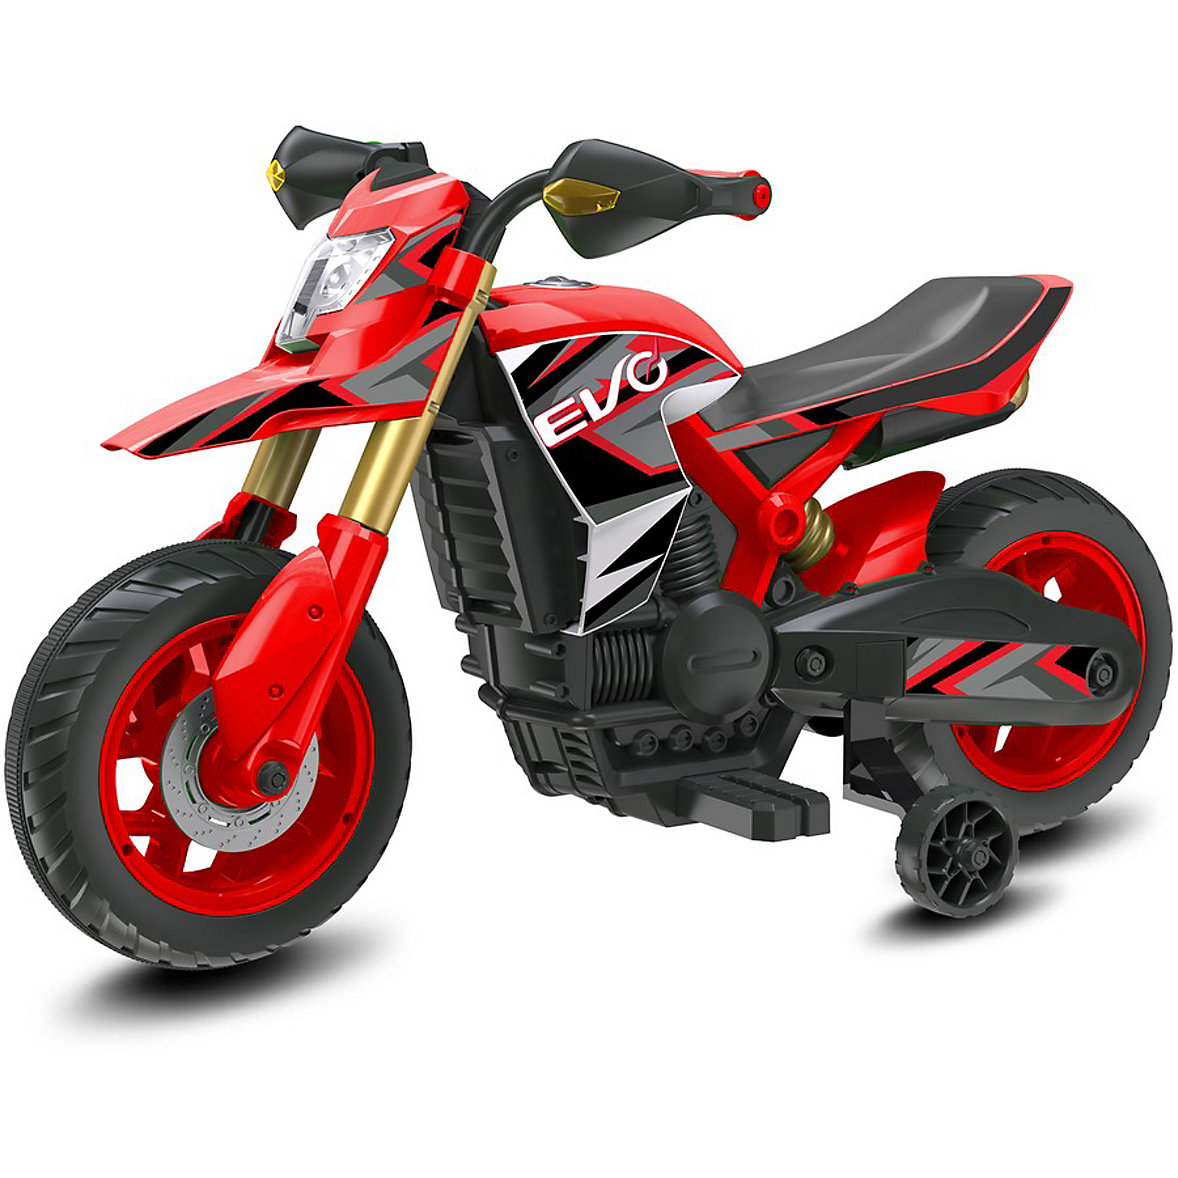 Evo Rally Motorbike - Red